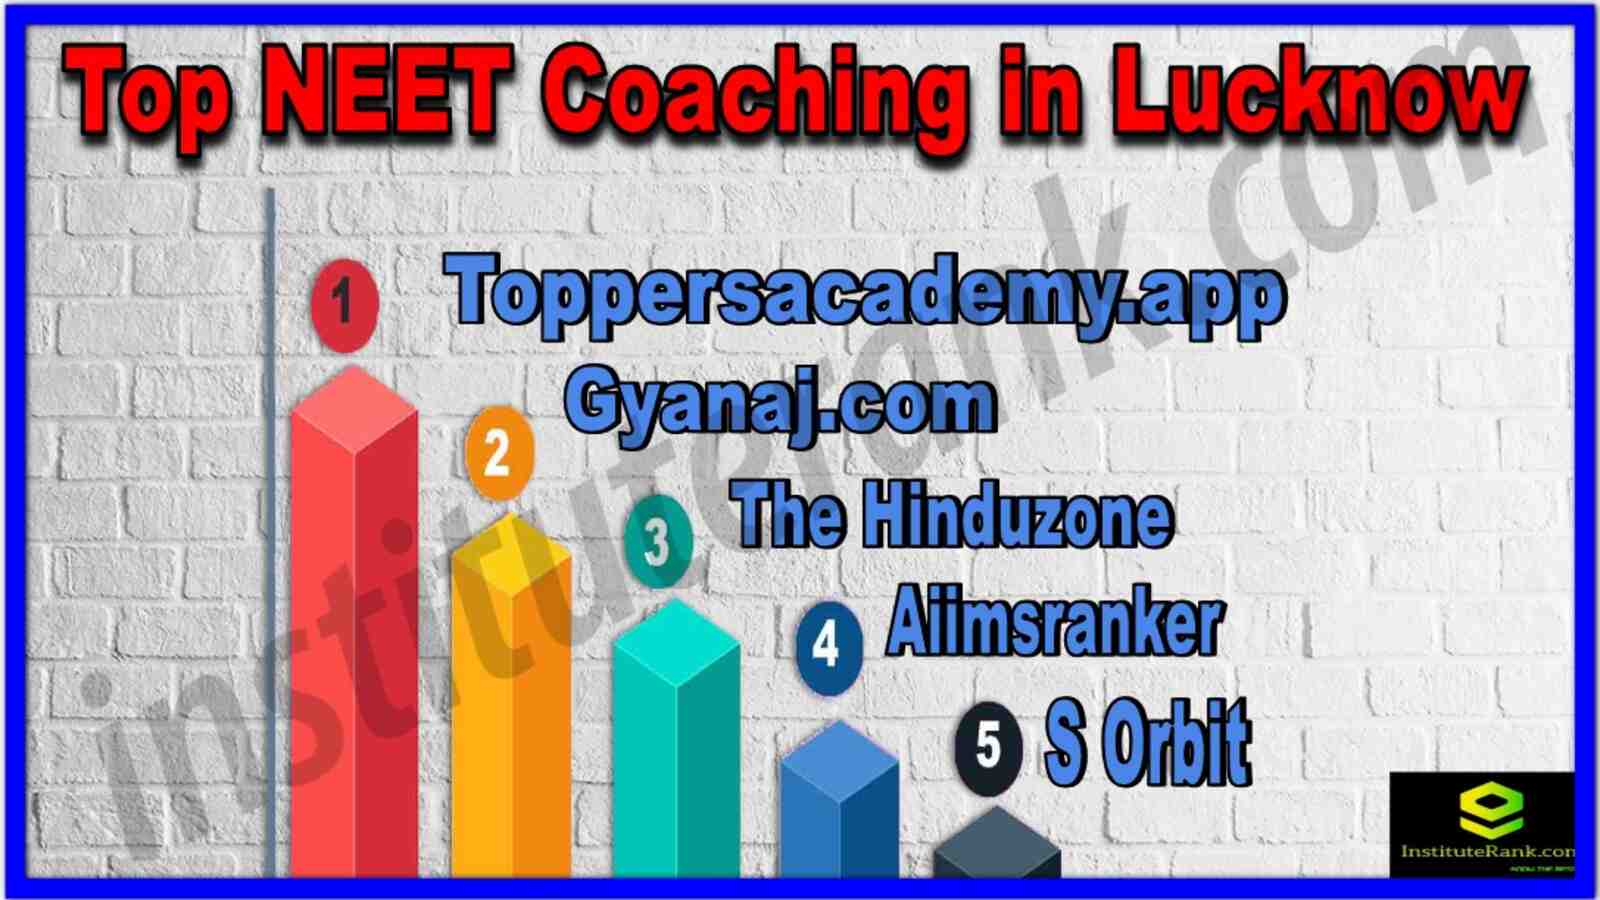 Top 10 NEET Coaching in Lucknow